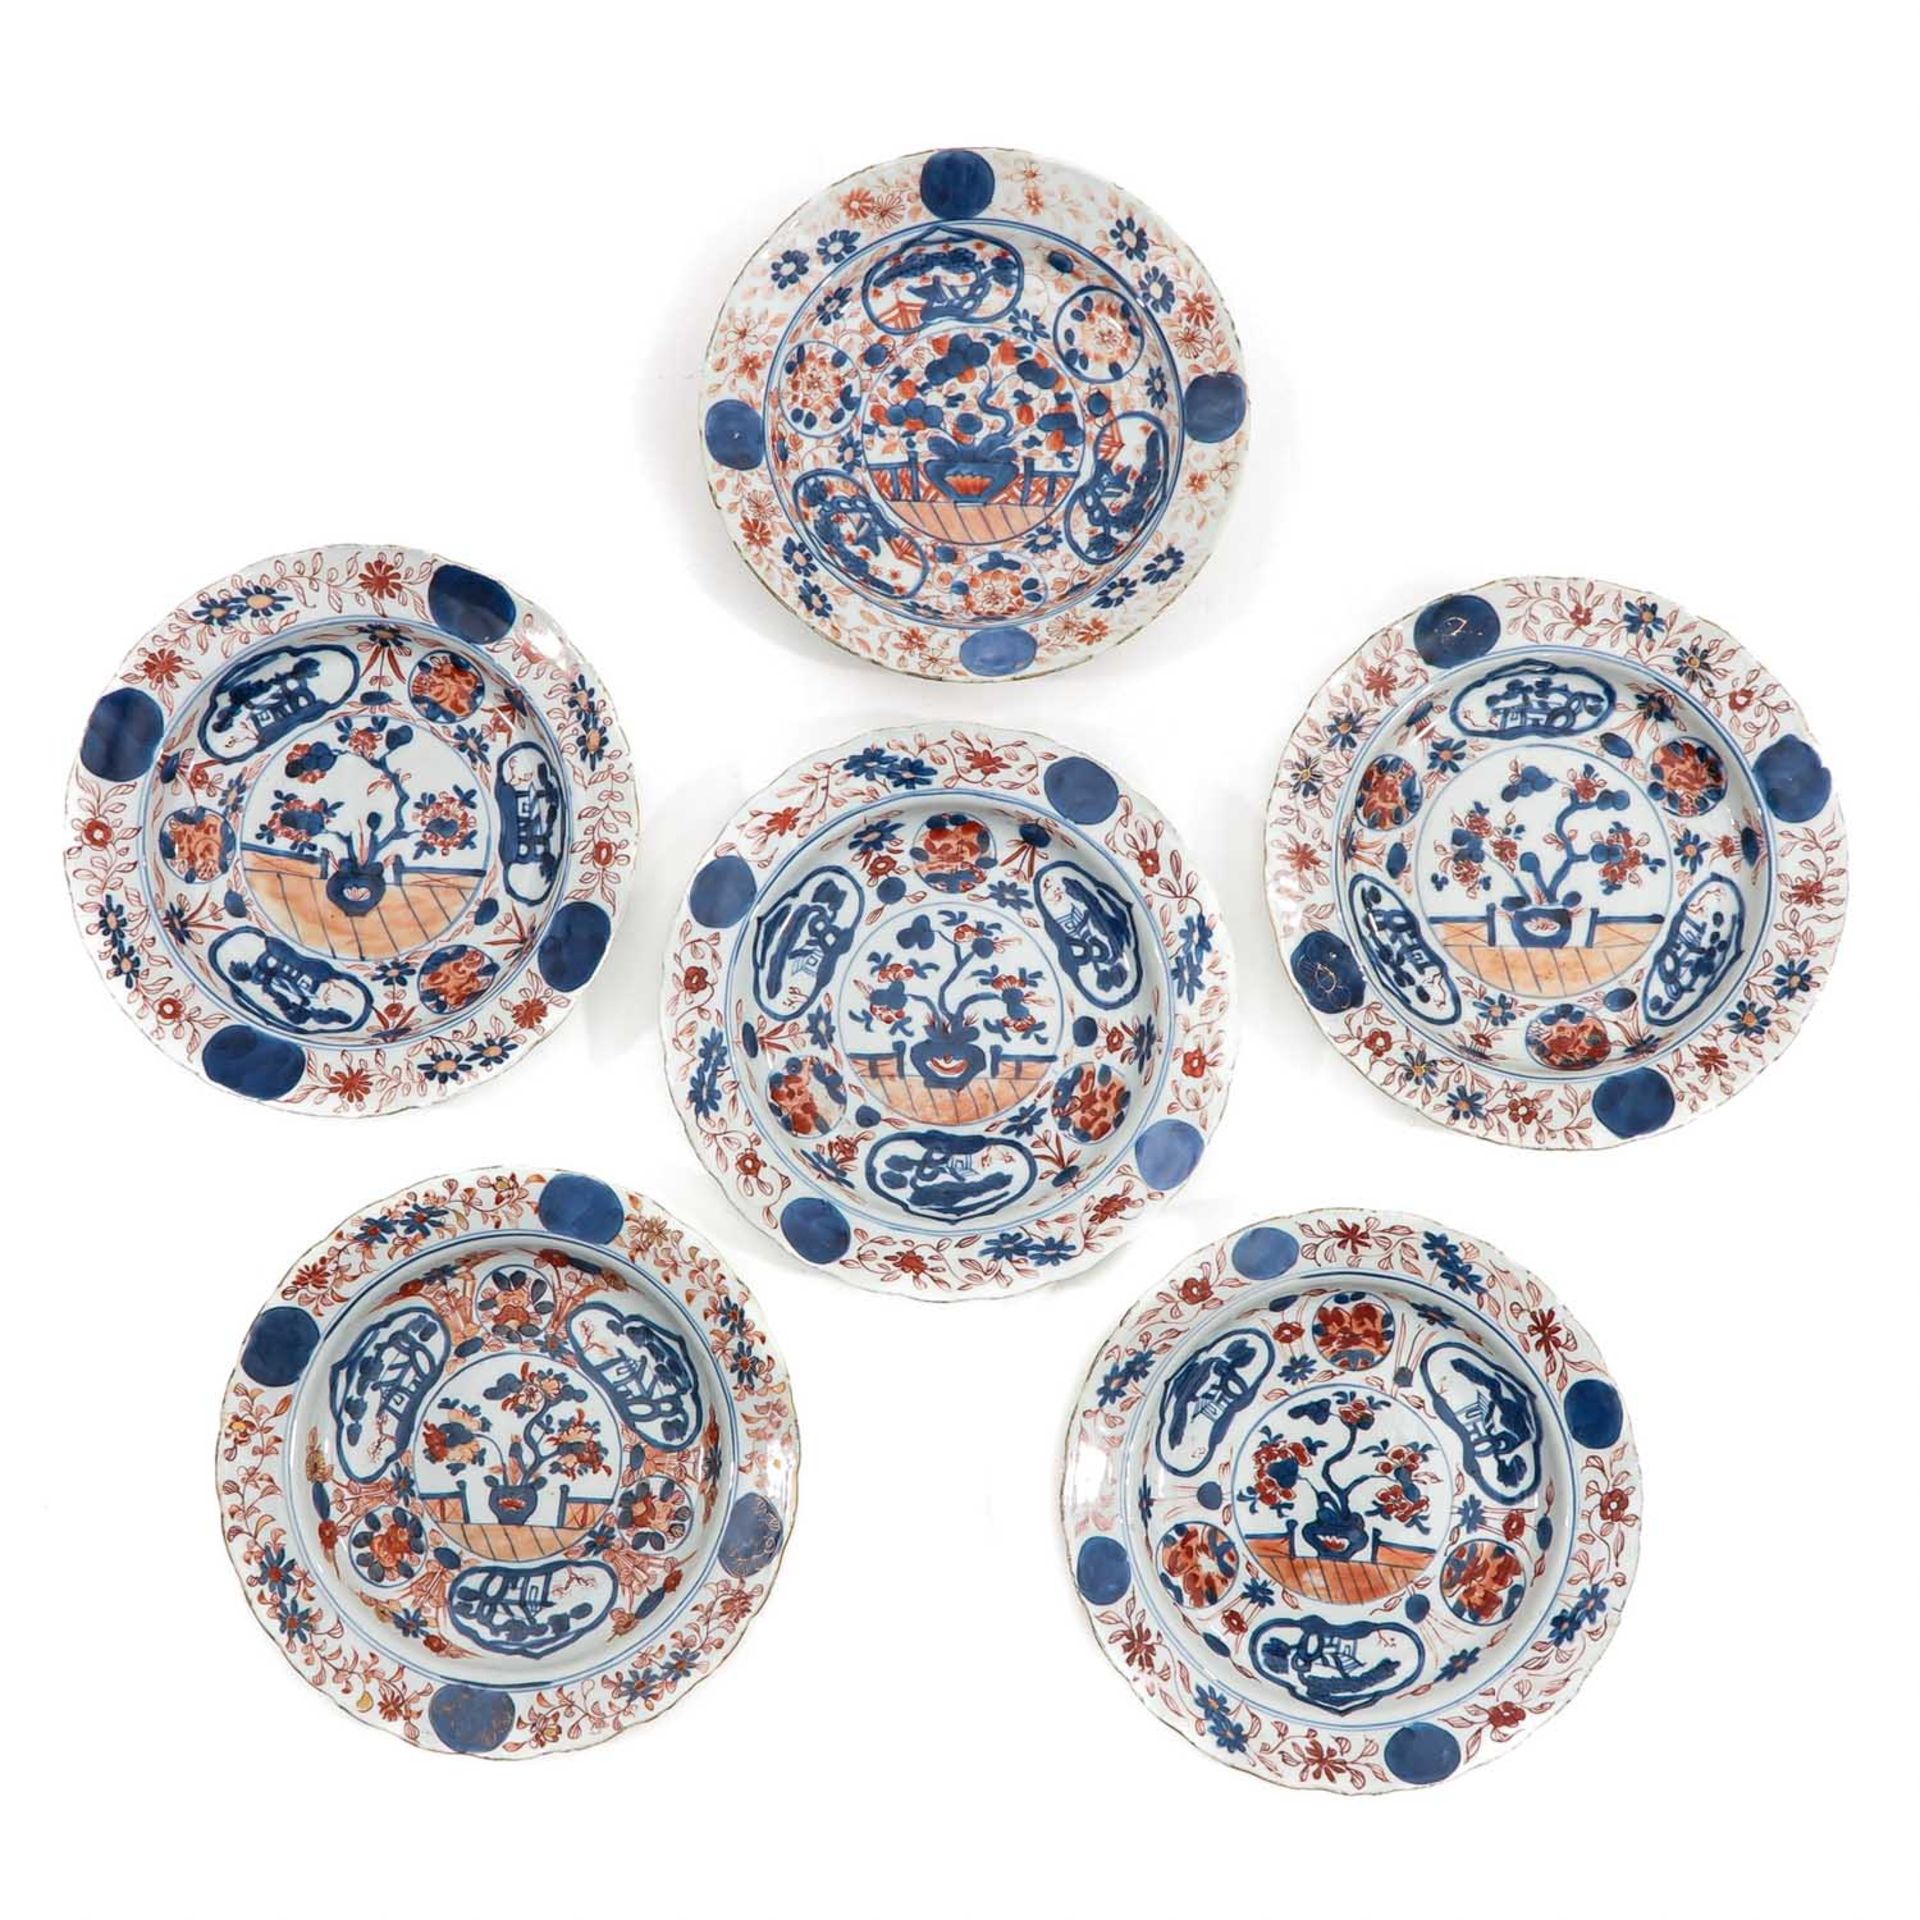 A Series of 6 Polychrome Plates